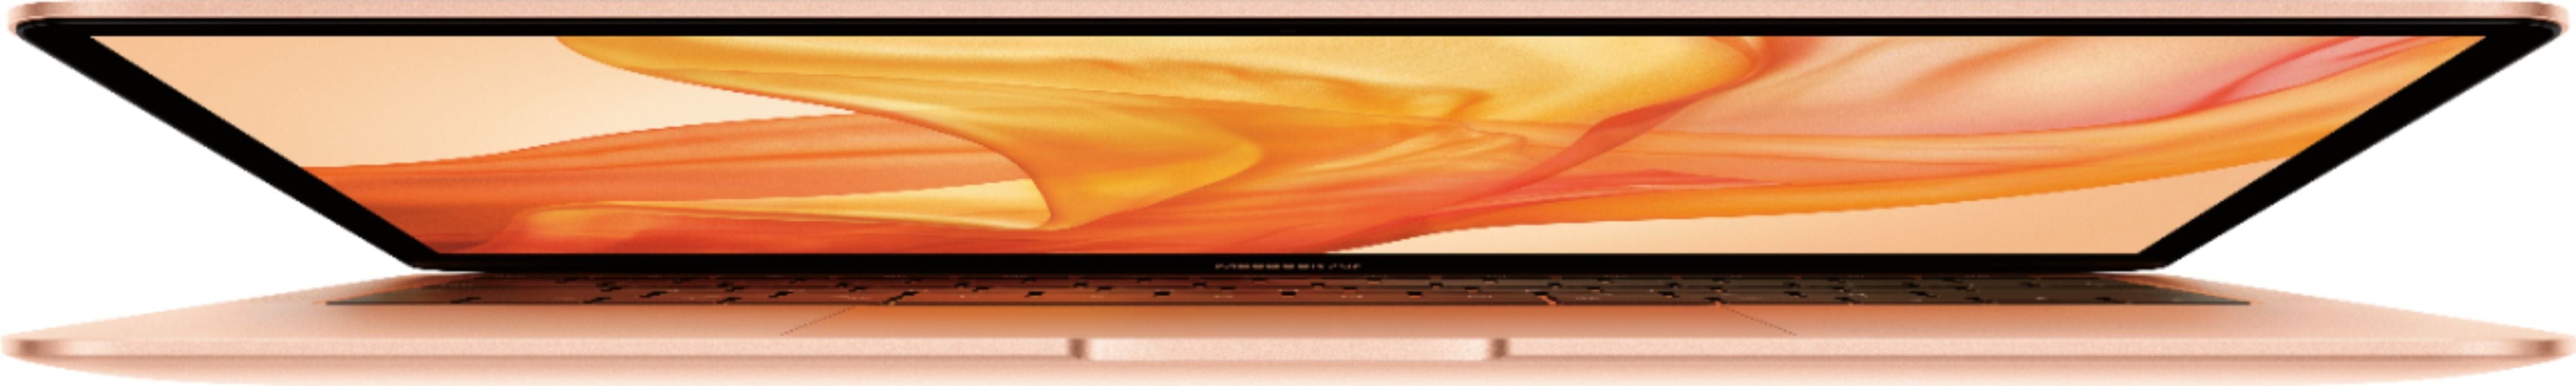 Apple MacBook Air 13.3" with True Tone Retina (2019) - Core i5 1.6GHz - 8GB Memory - 256GB SSD - Gold - (MVFN2LL/A)